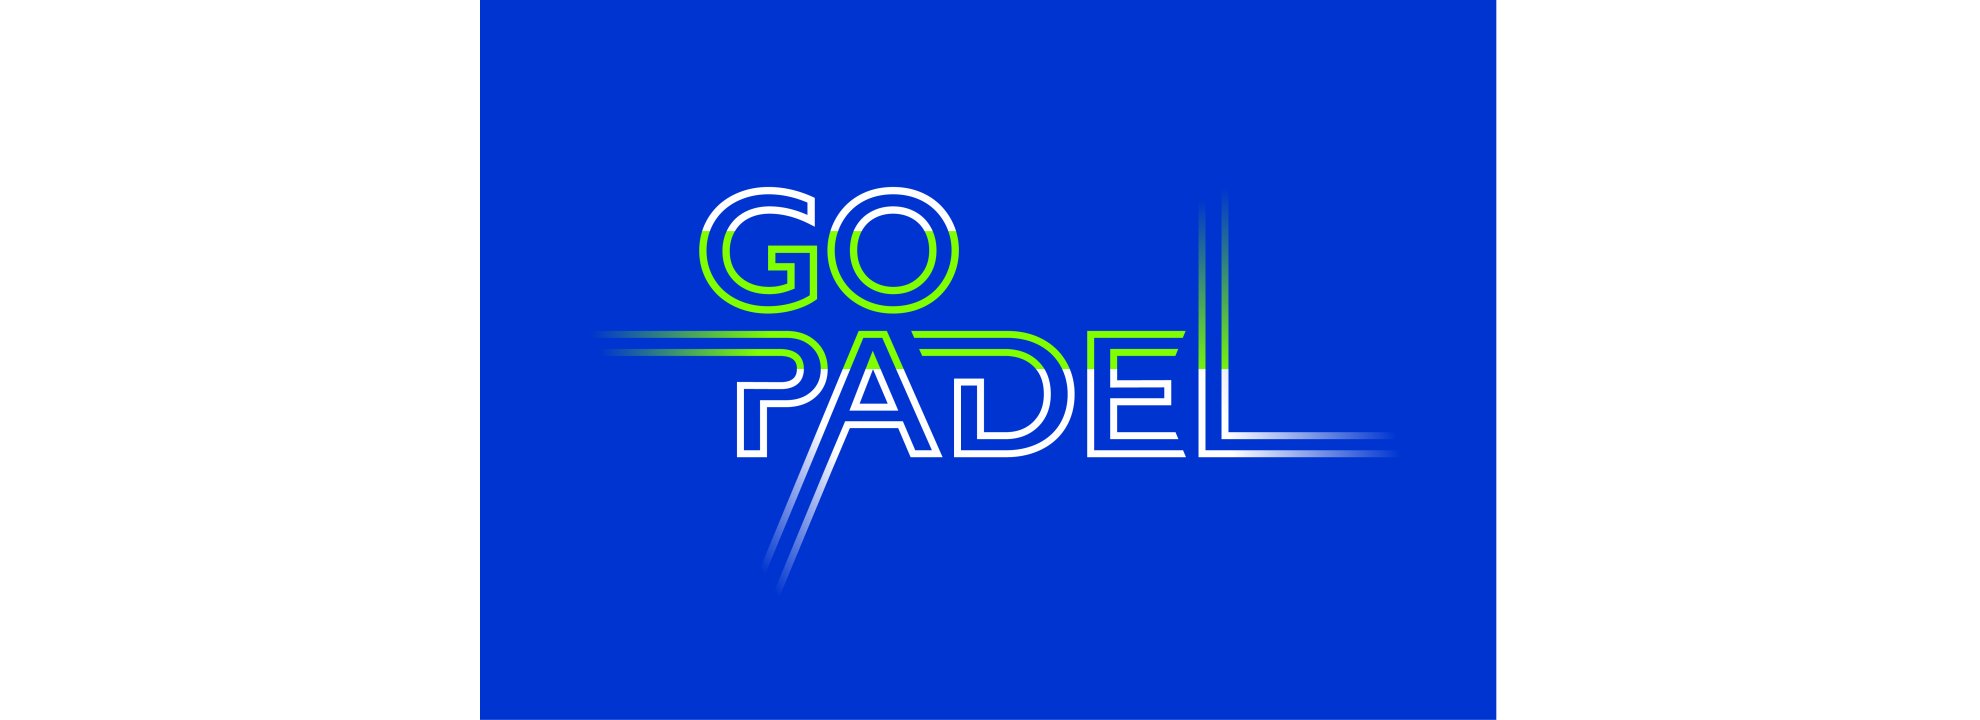 Glasgow Sport - Padel Tennis